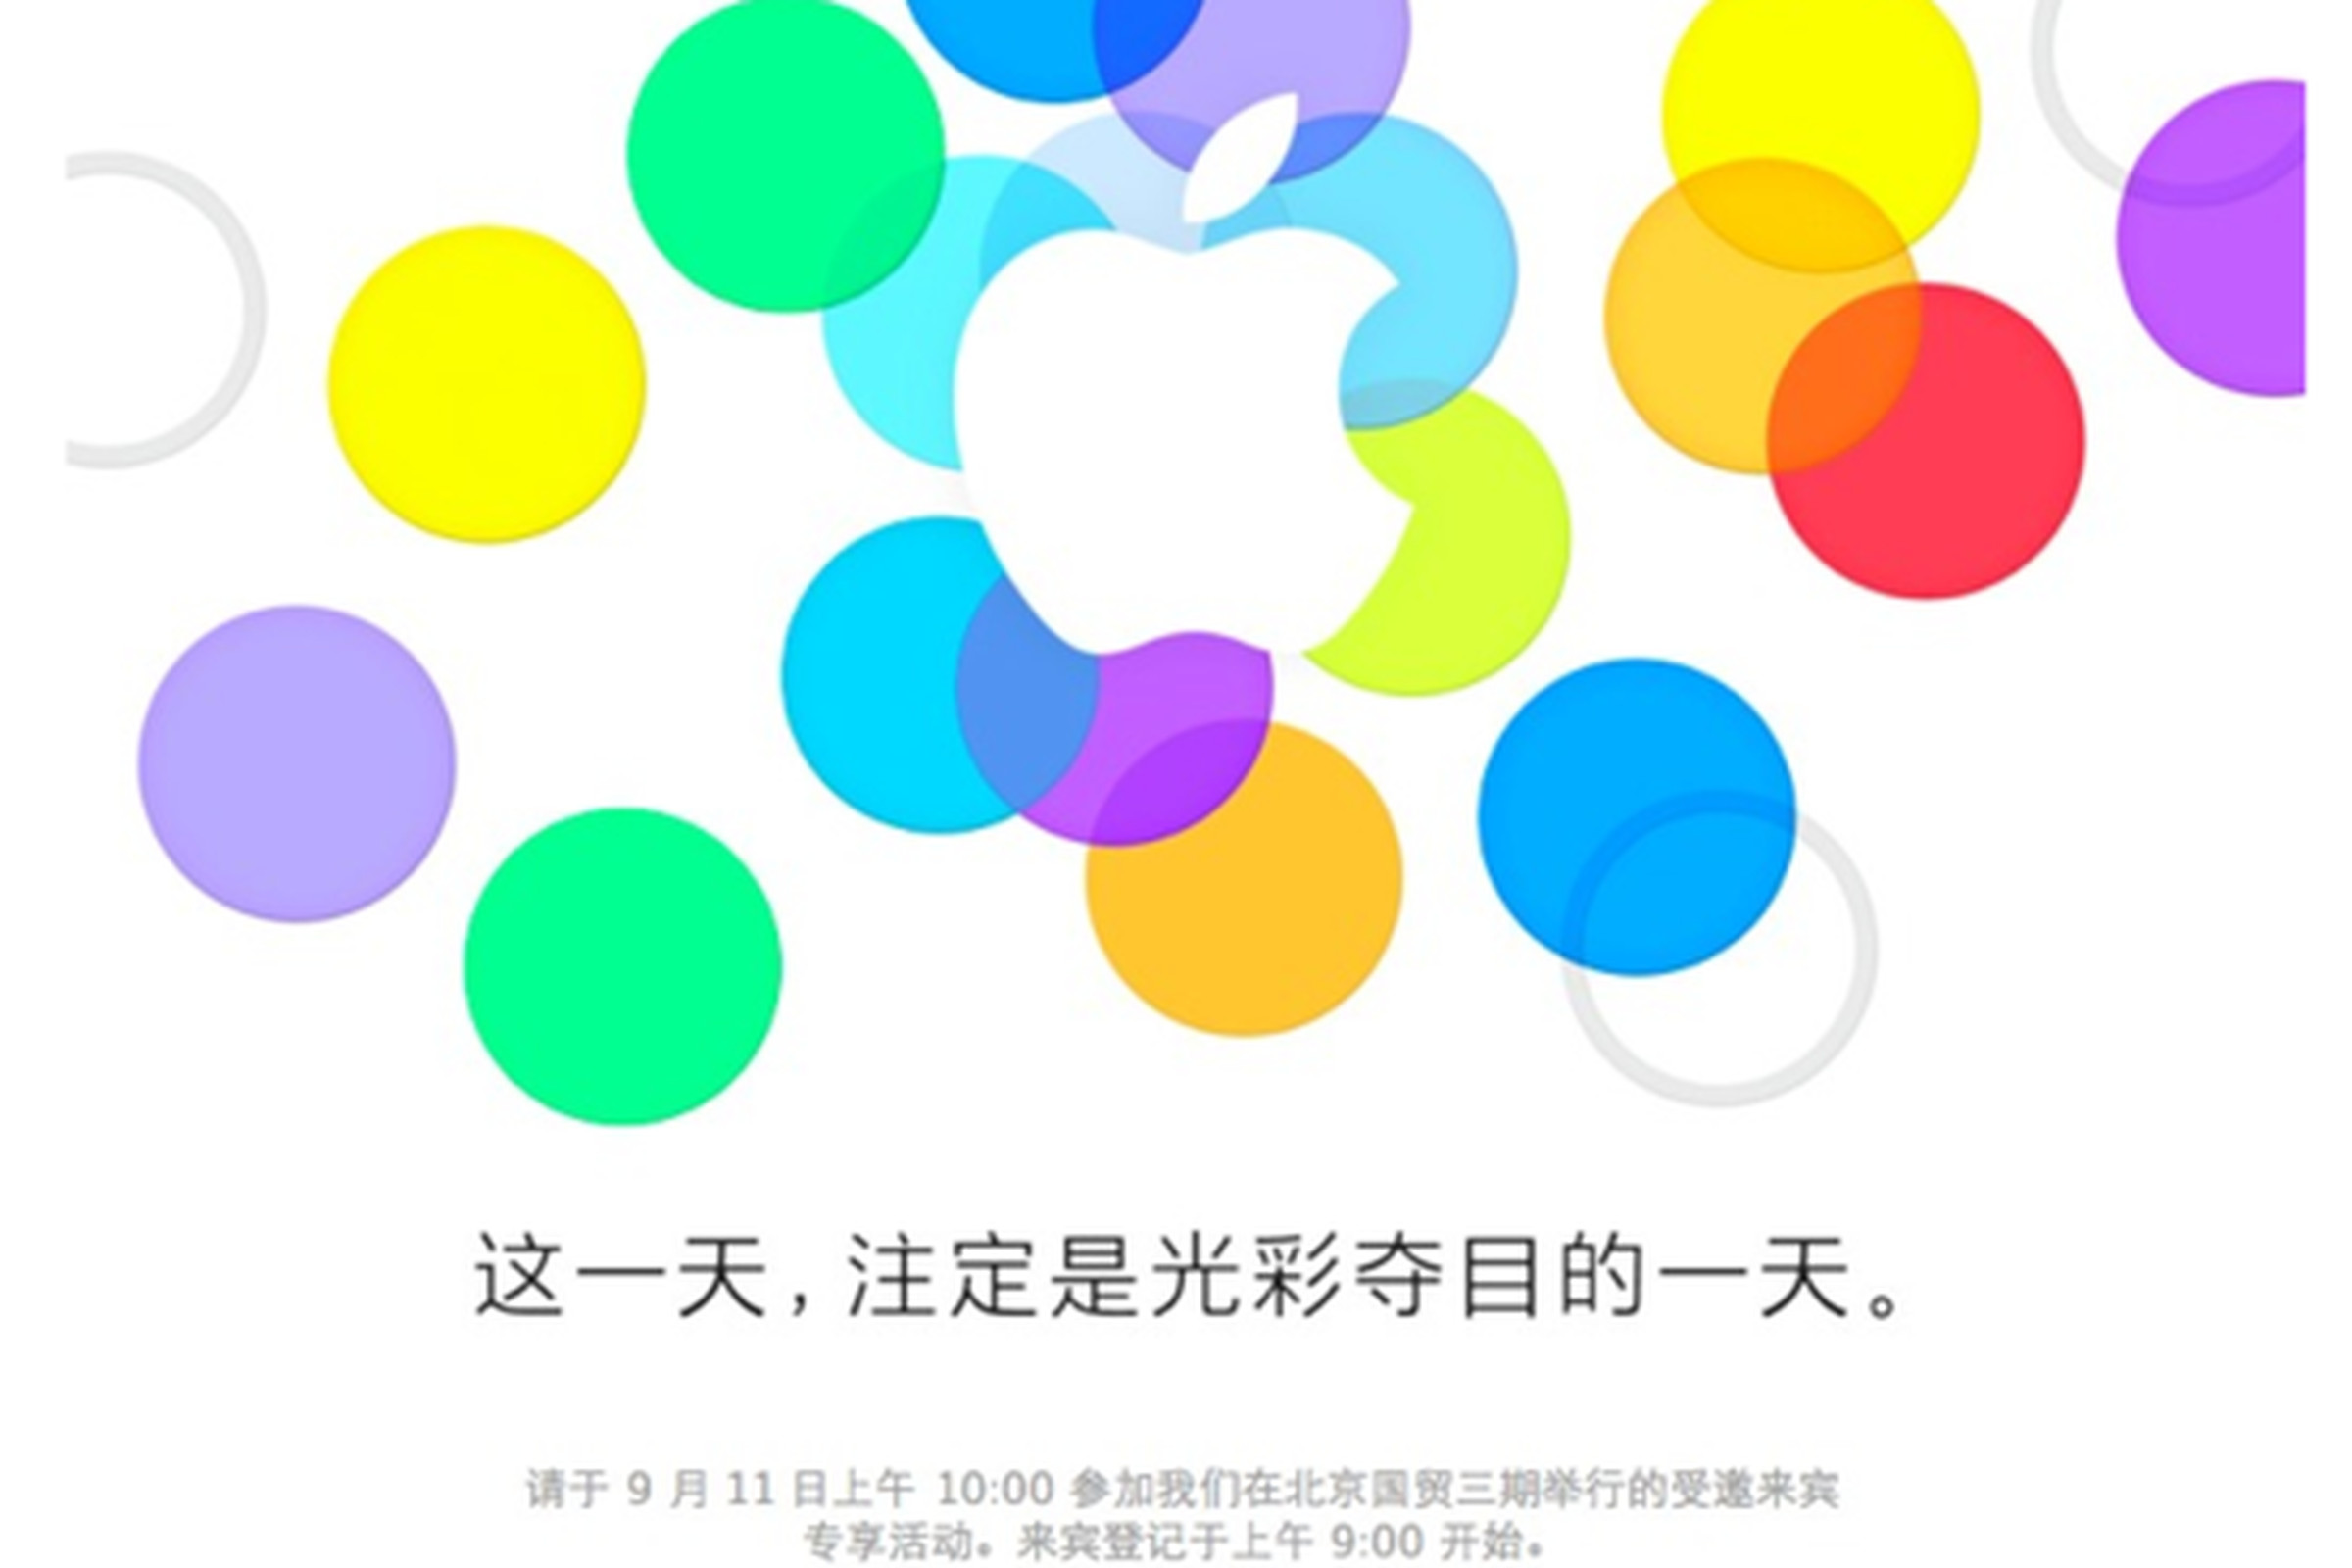 Apple China event invite